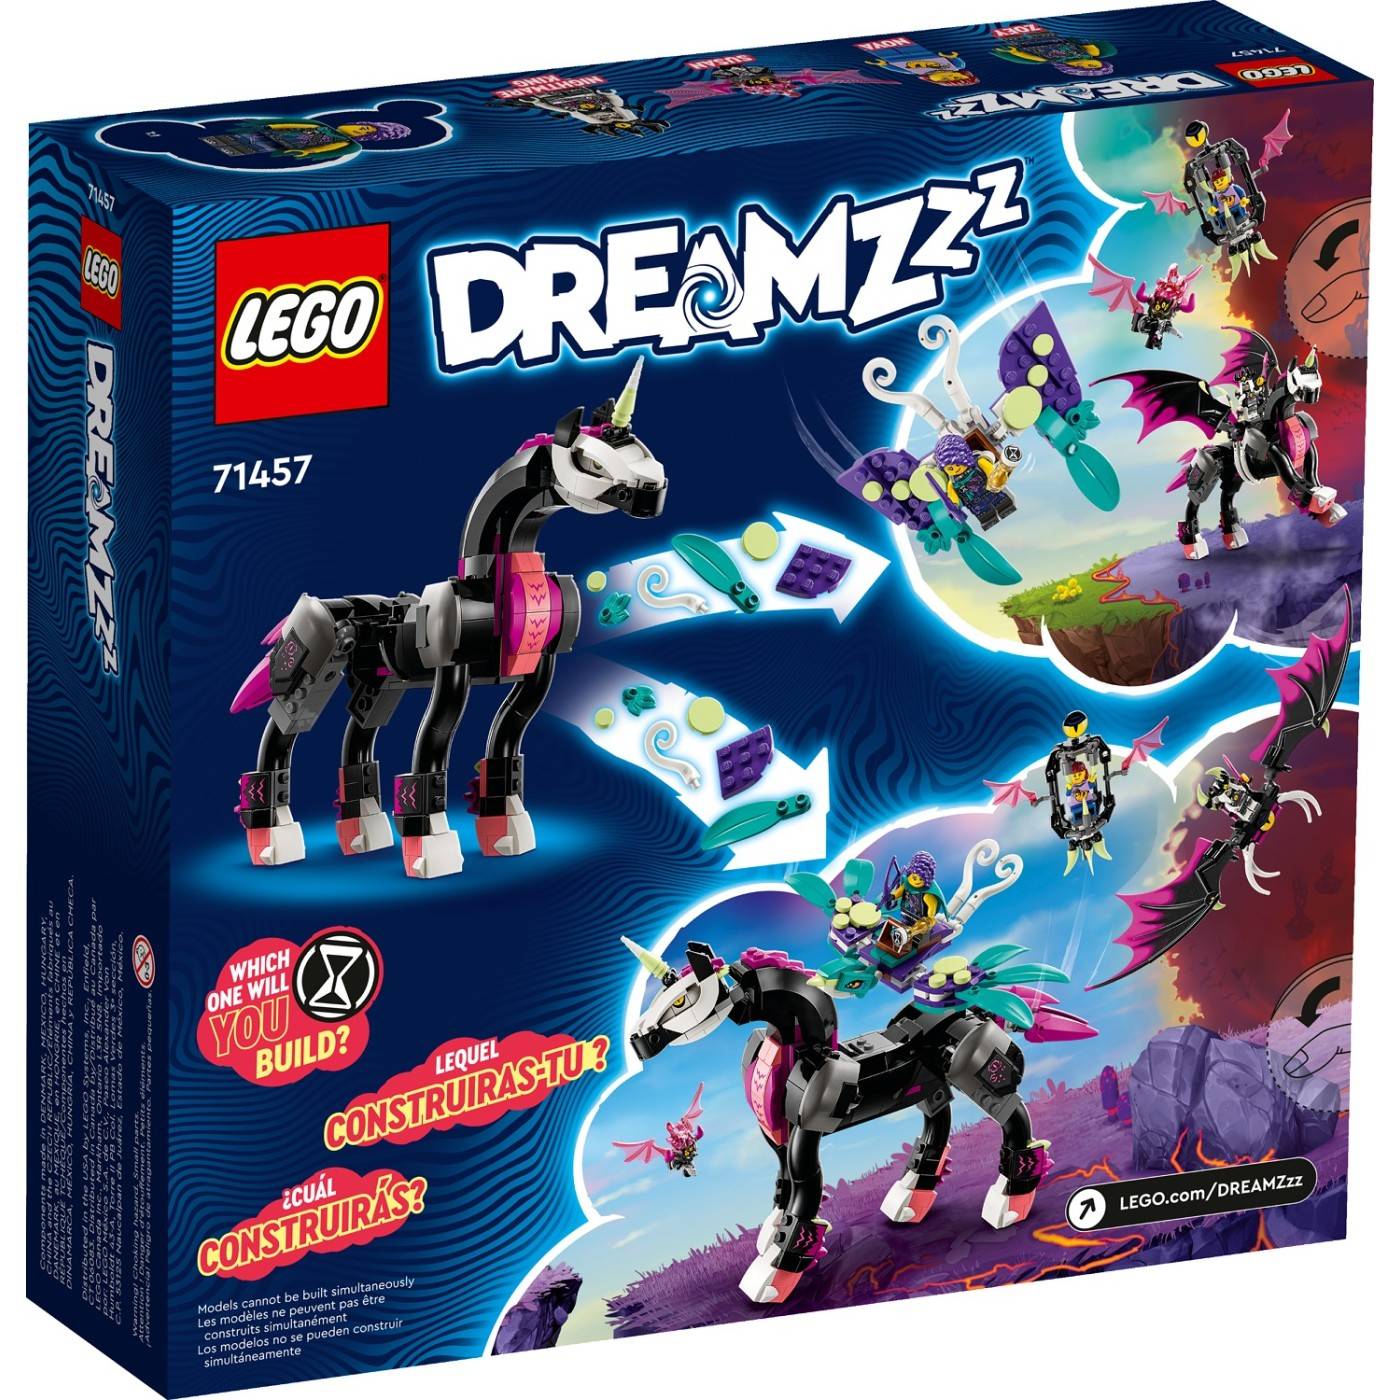 LEGO 71457 DREAMZZZ PEGASUS FLYING HORSE